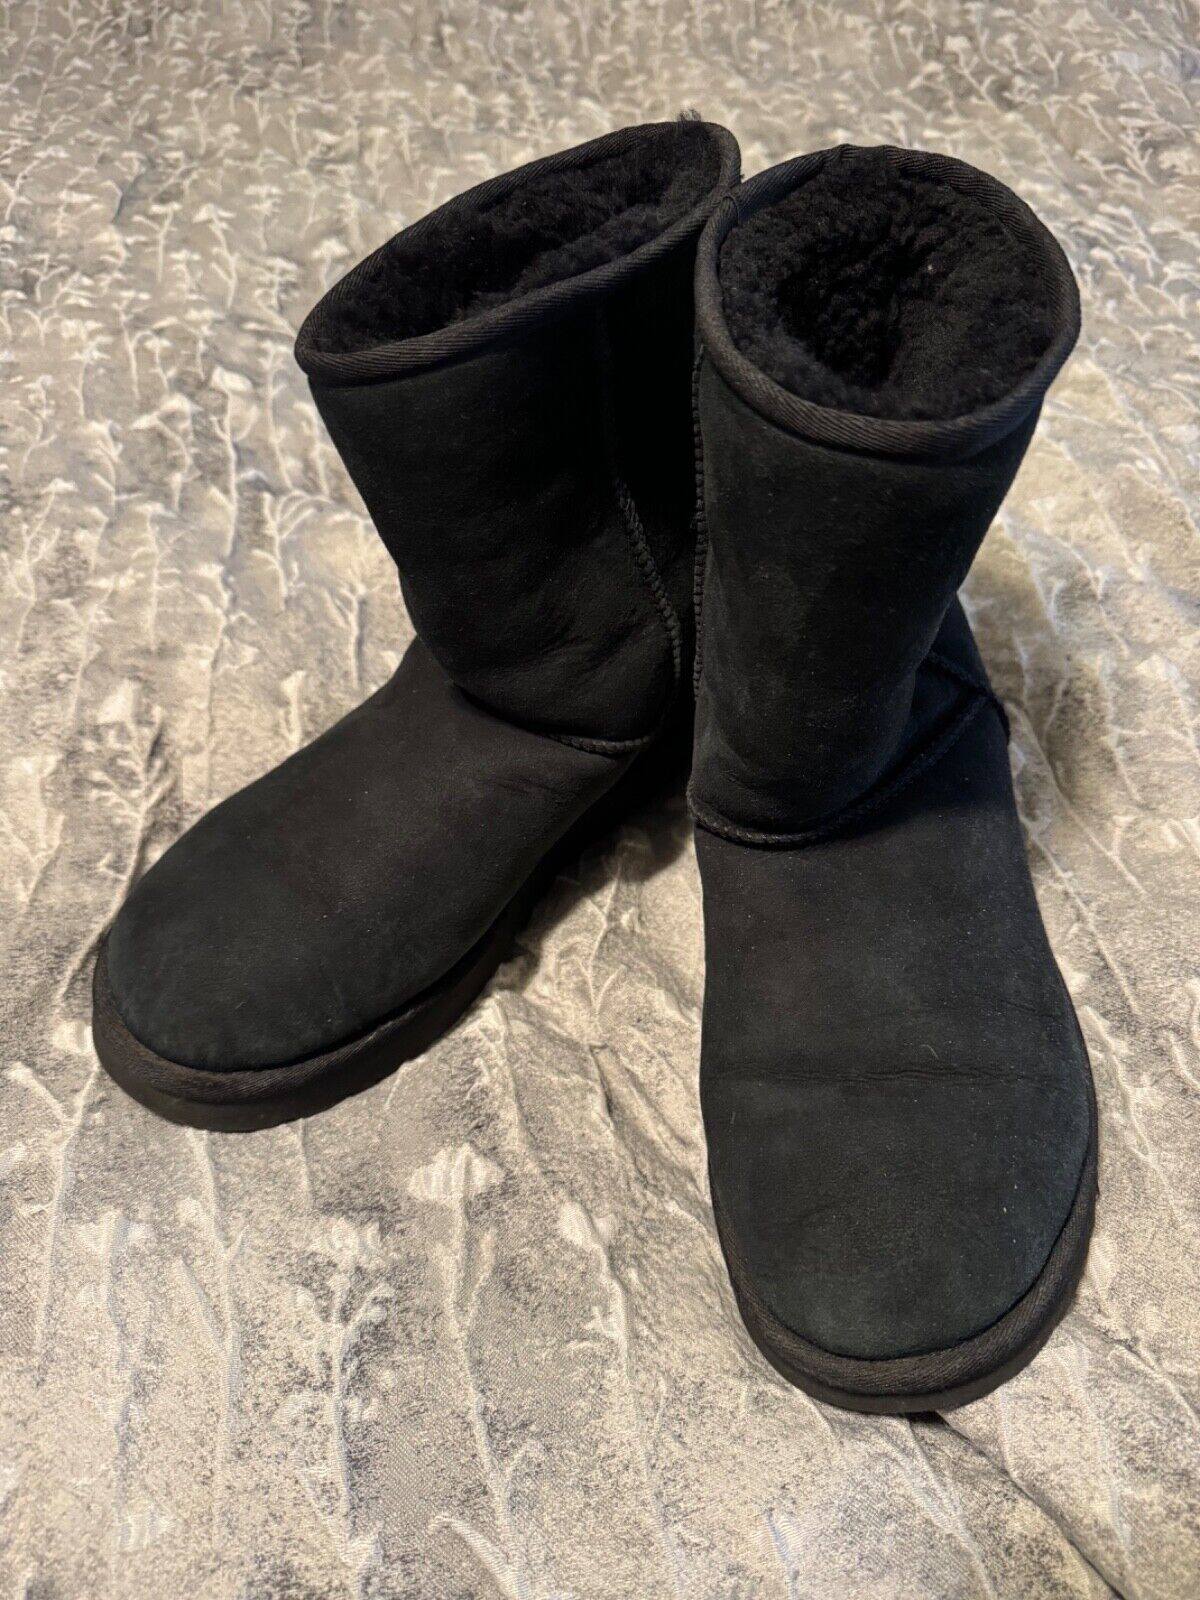 Ugg australian women's winter boots black size 10 - image 2